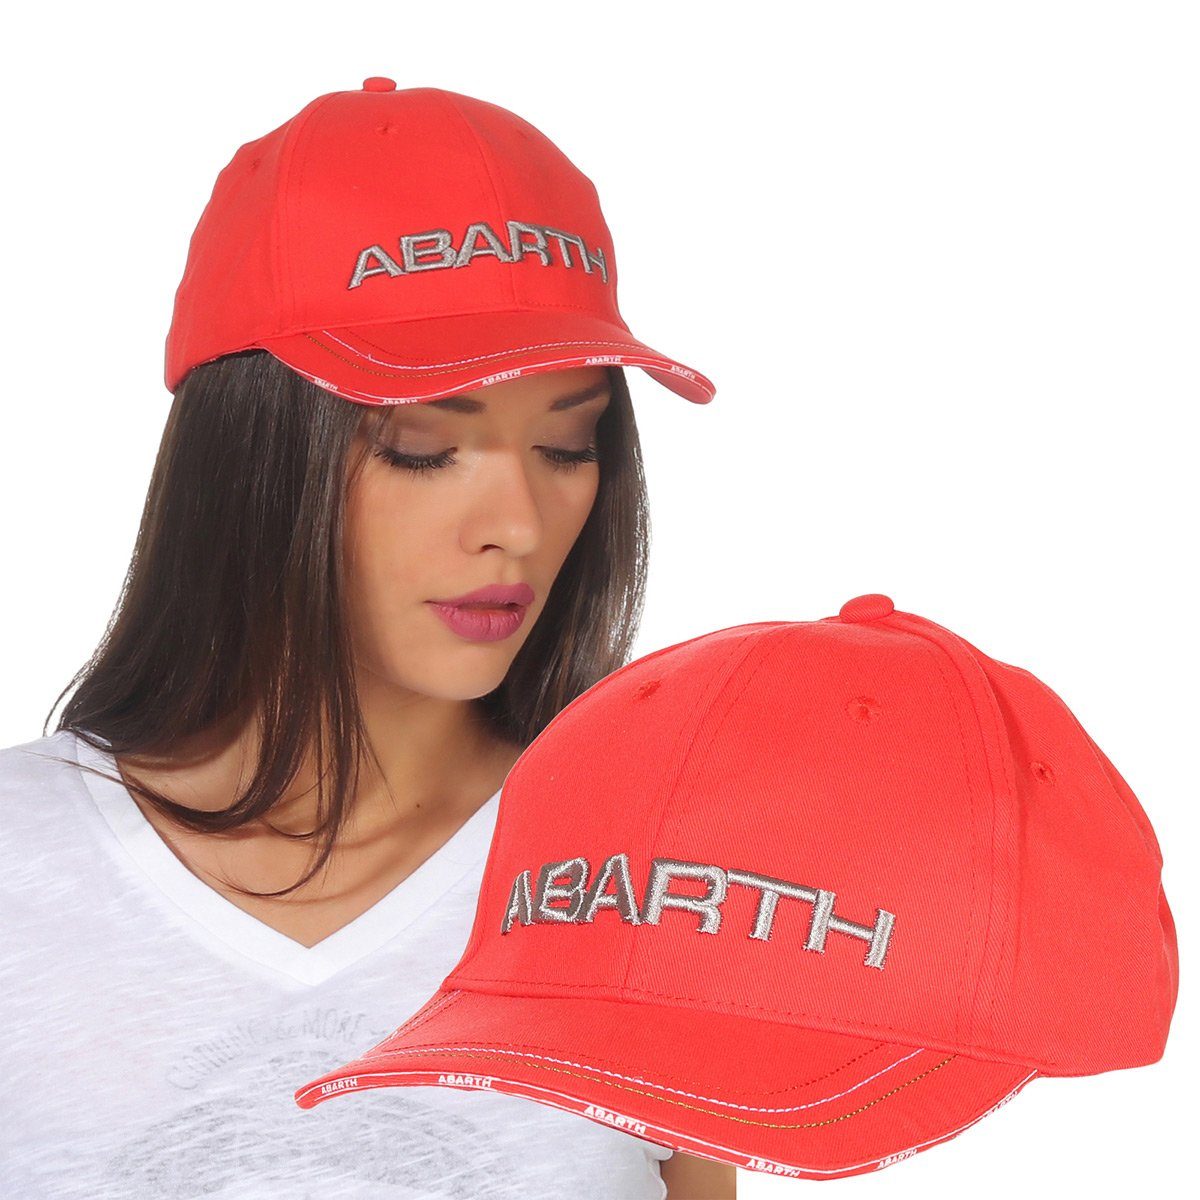 Baseball Damen Schildmütze Cap Rot Basecap Mütze Abarth Markenwarenshop-Style Kappe Cap -